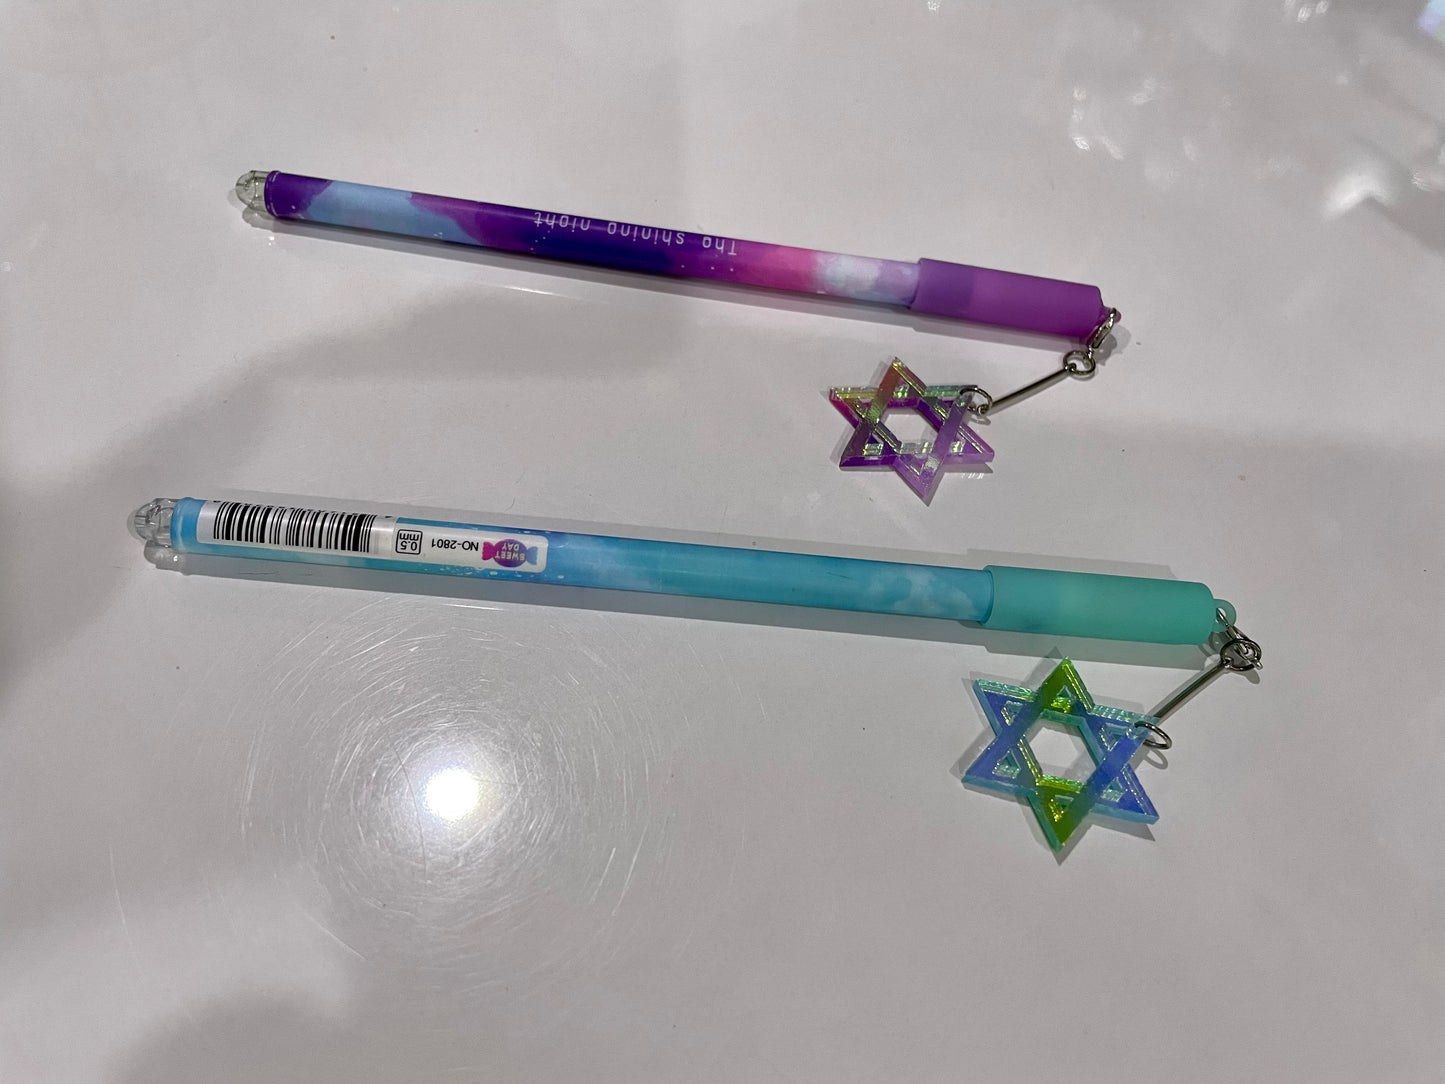 Metallic Style Star Of David Pen - Modern Great Family Gift Pen - Random Color Pick, 1 Count